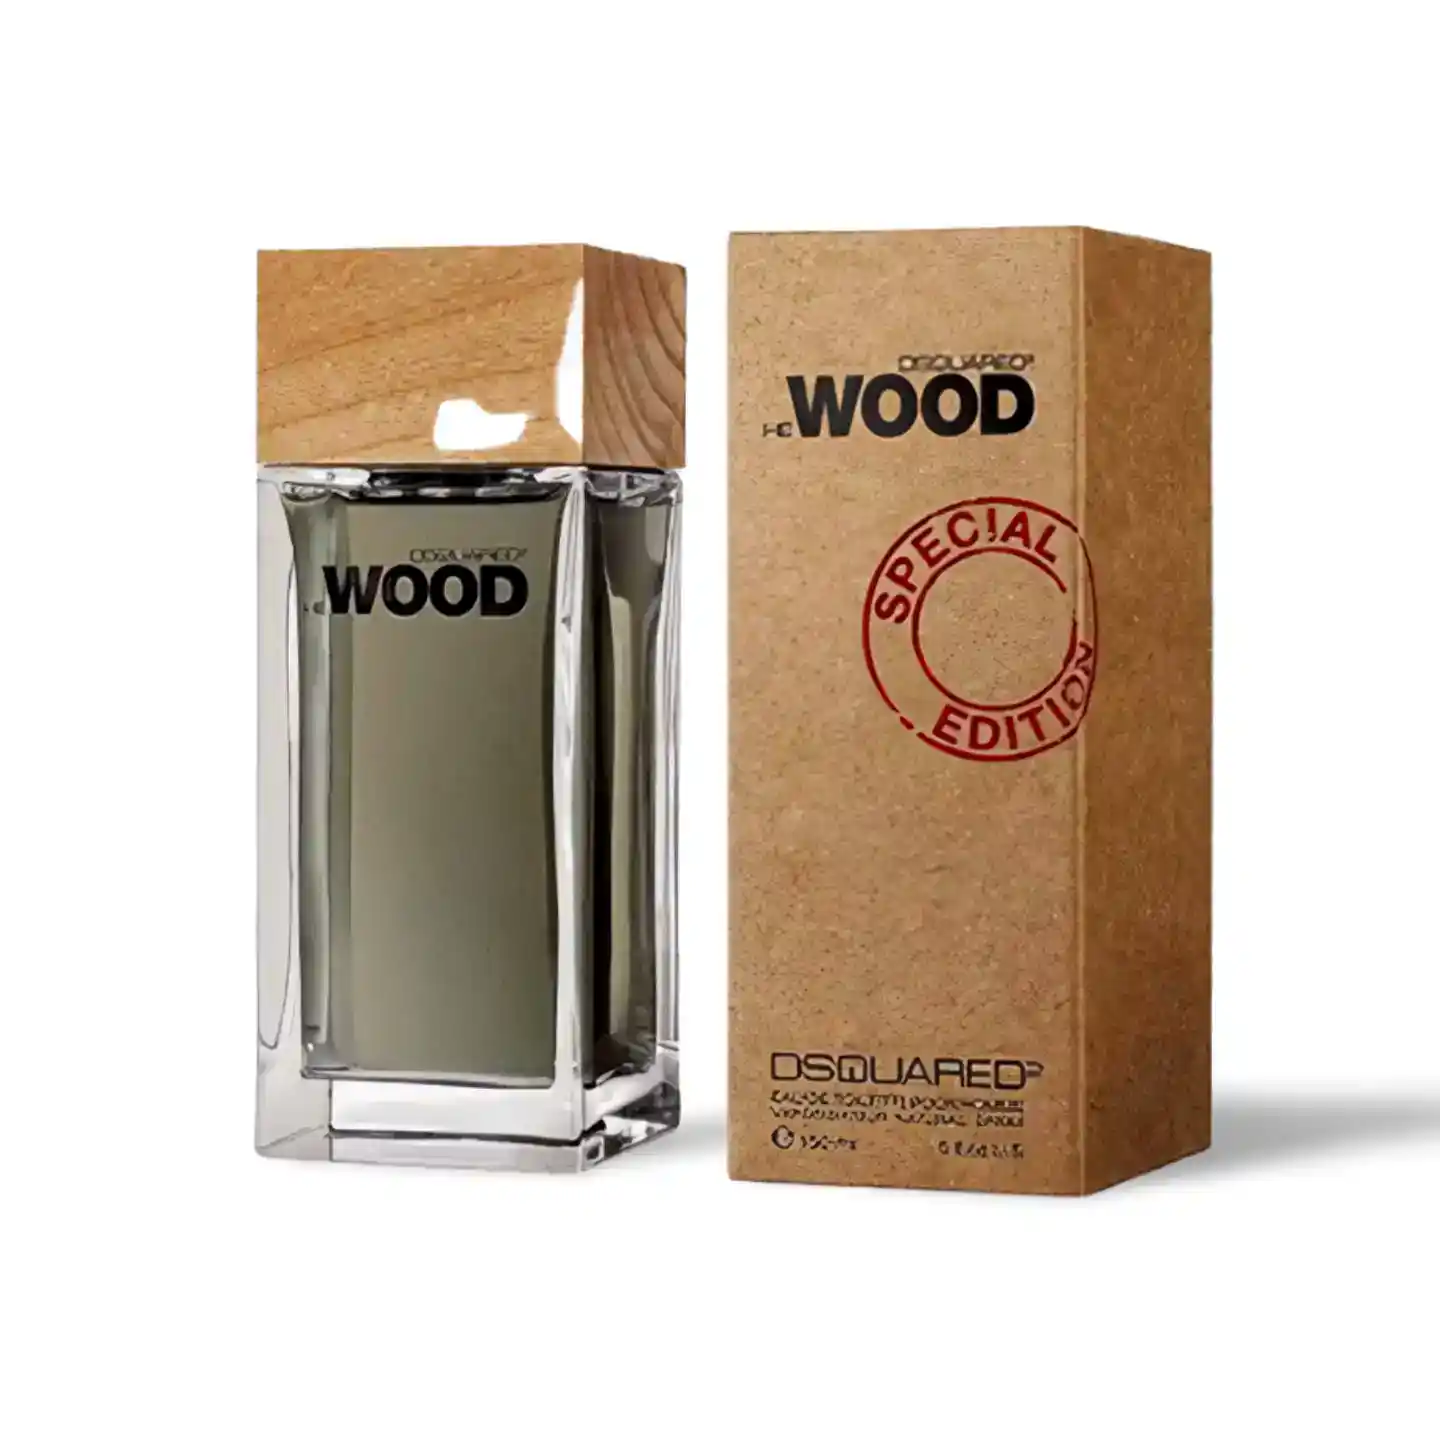 Wood & Spice Fragrance Perfume